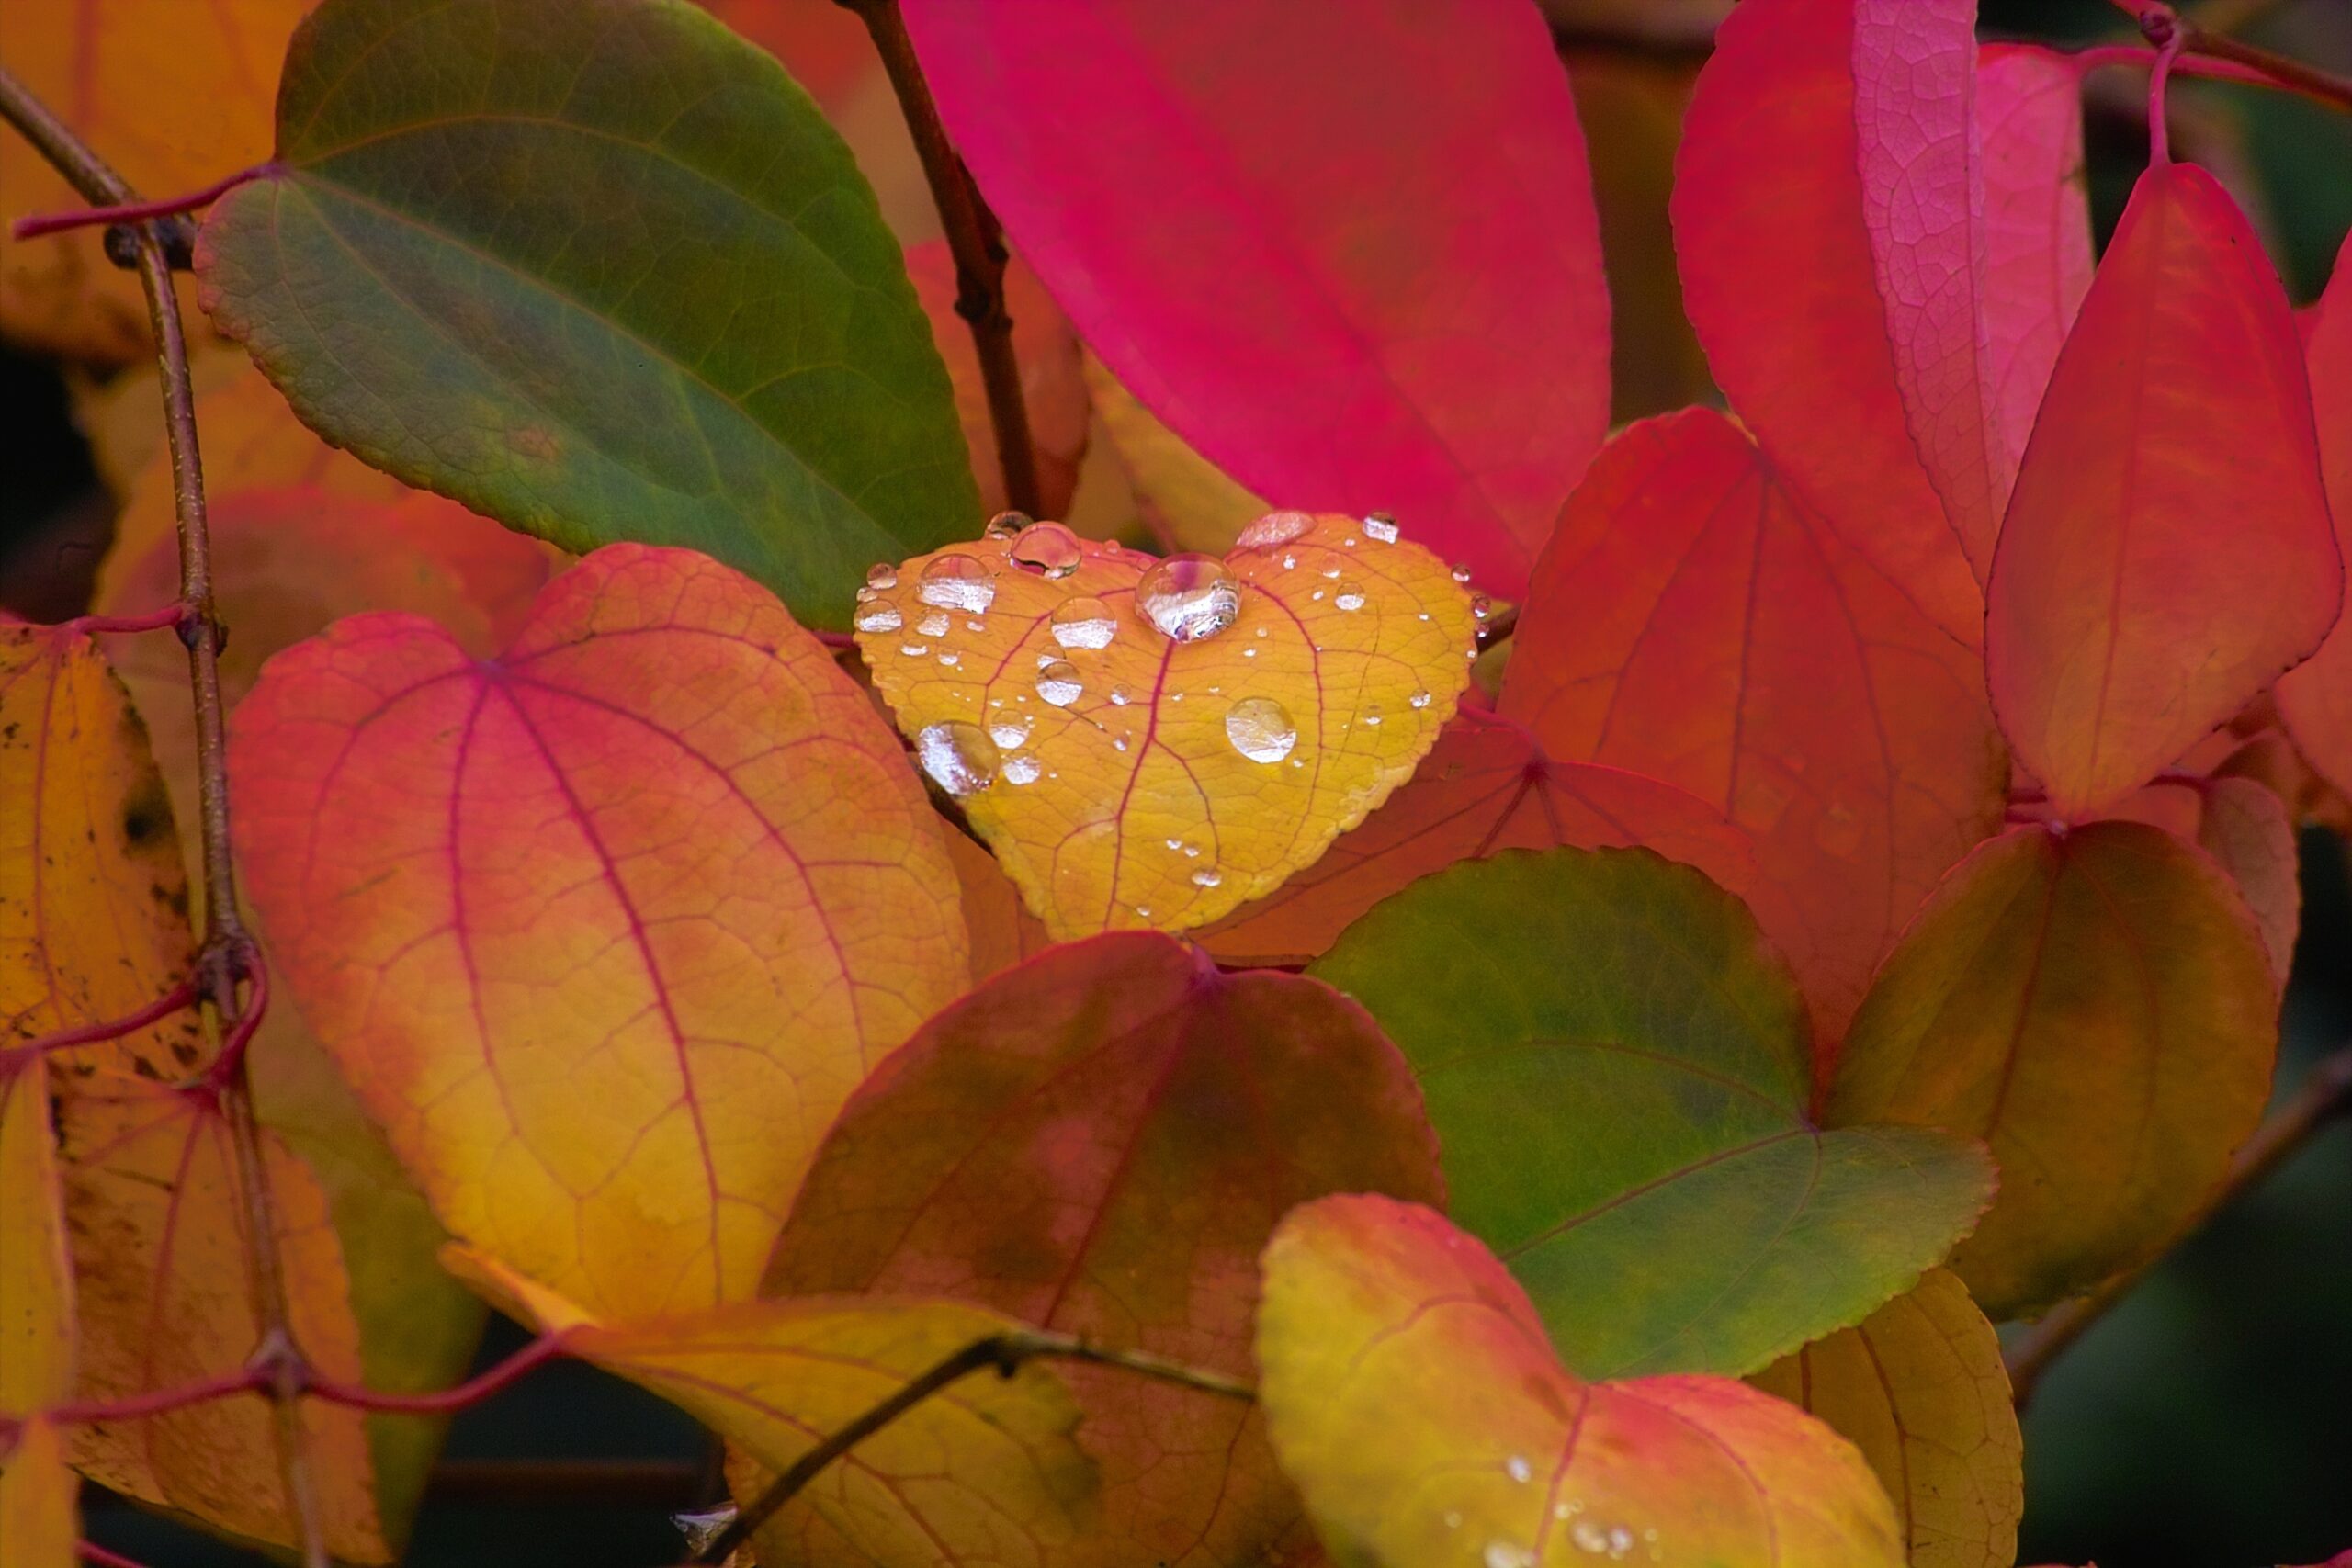 Cercidiphyllum-japonicum autumn leaves with raindrops